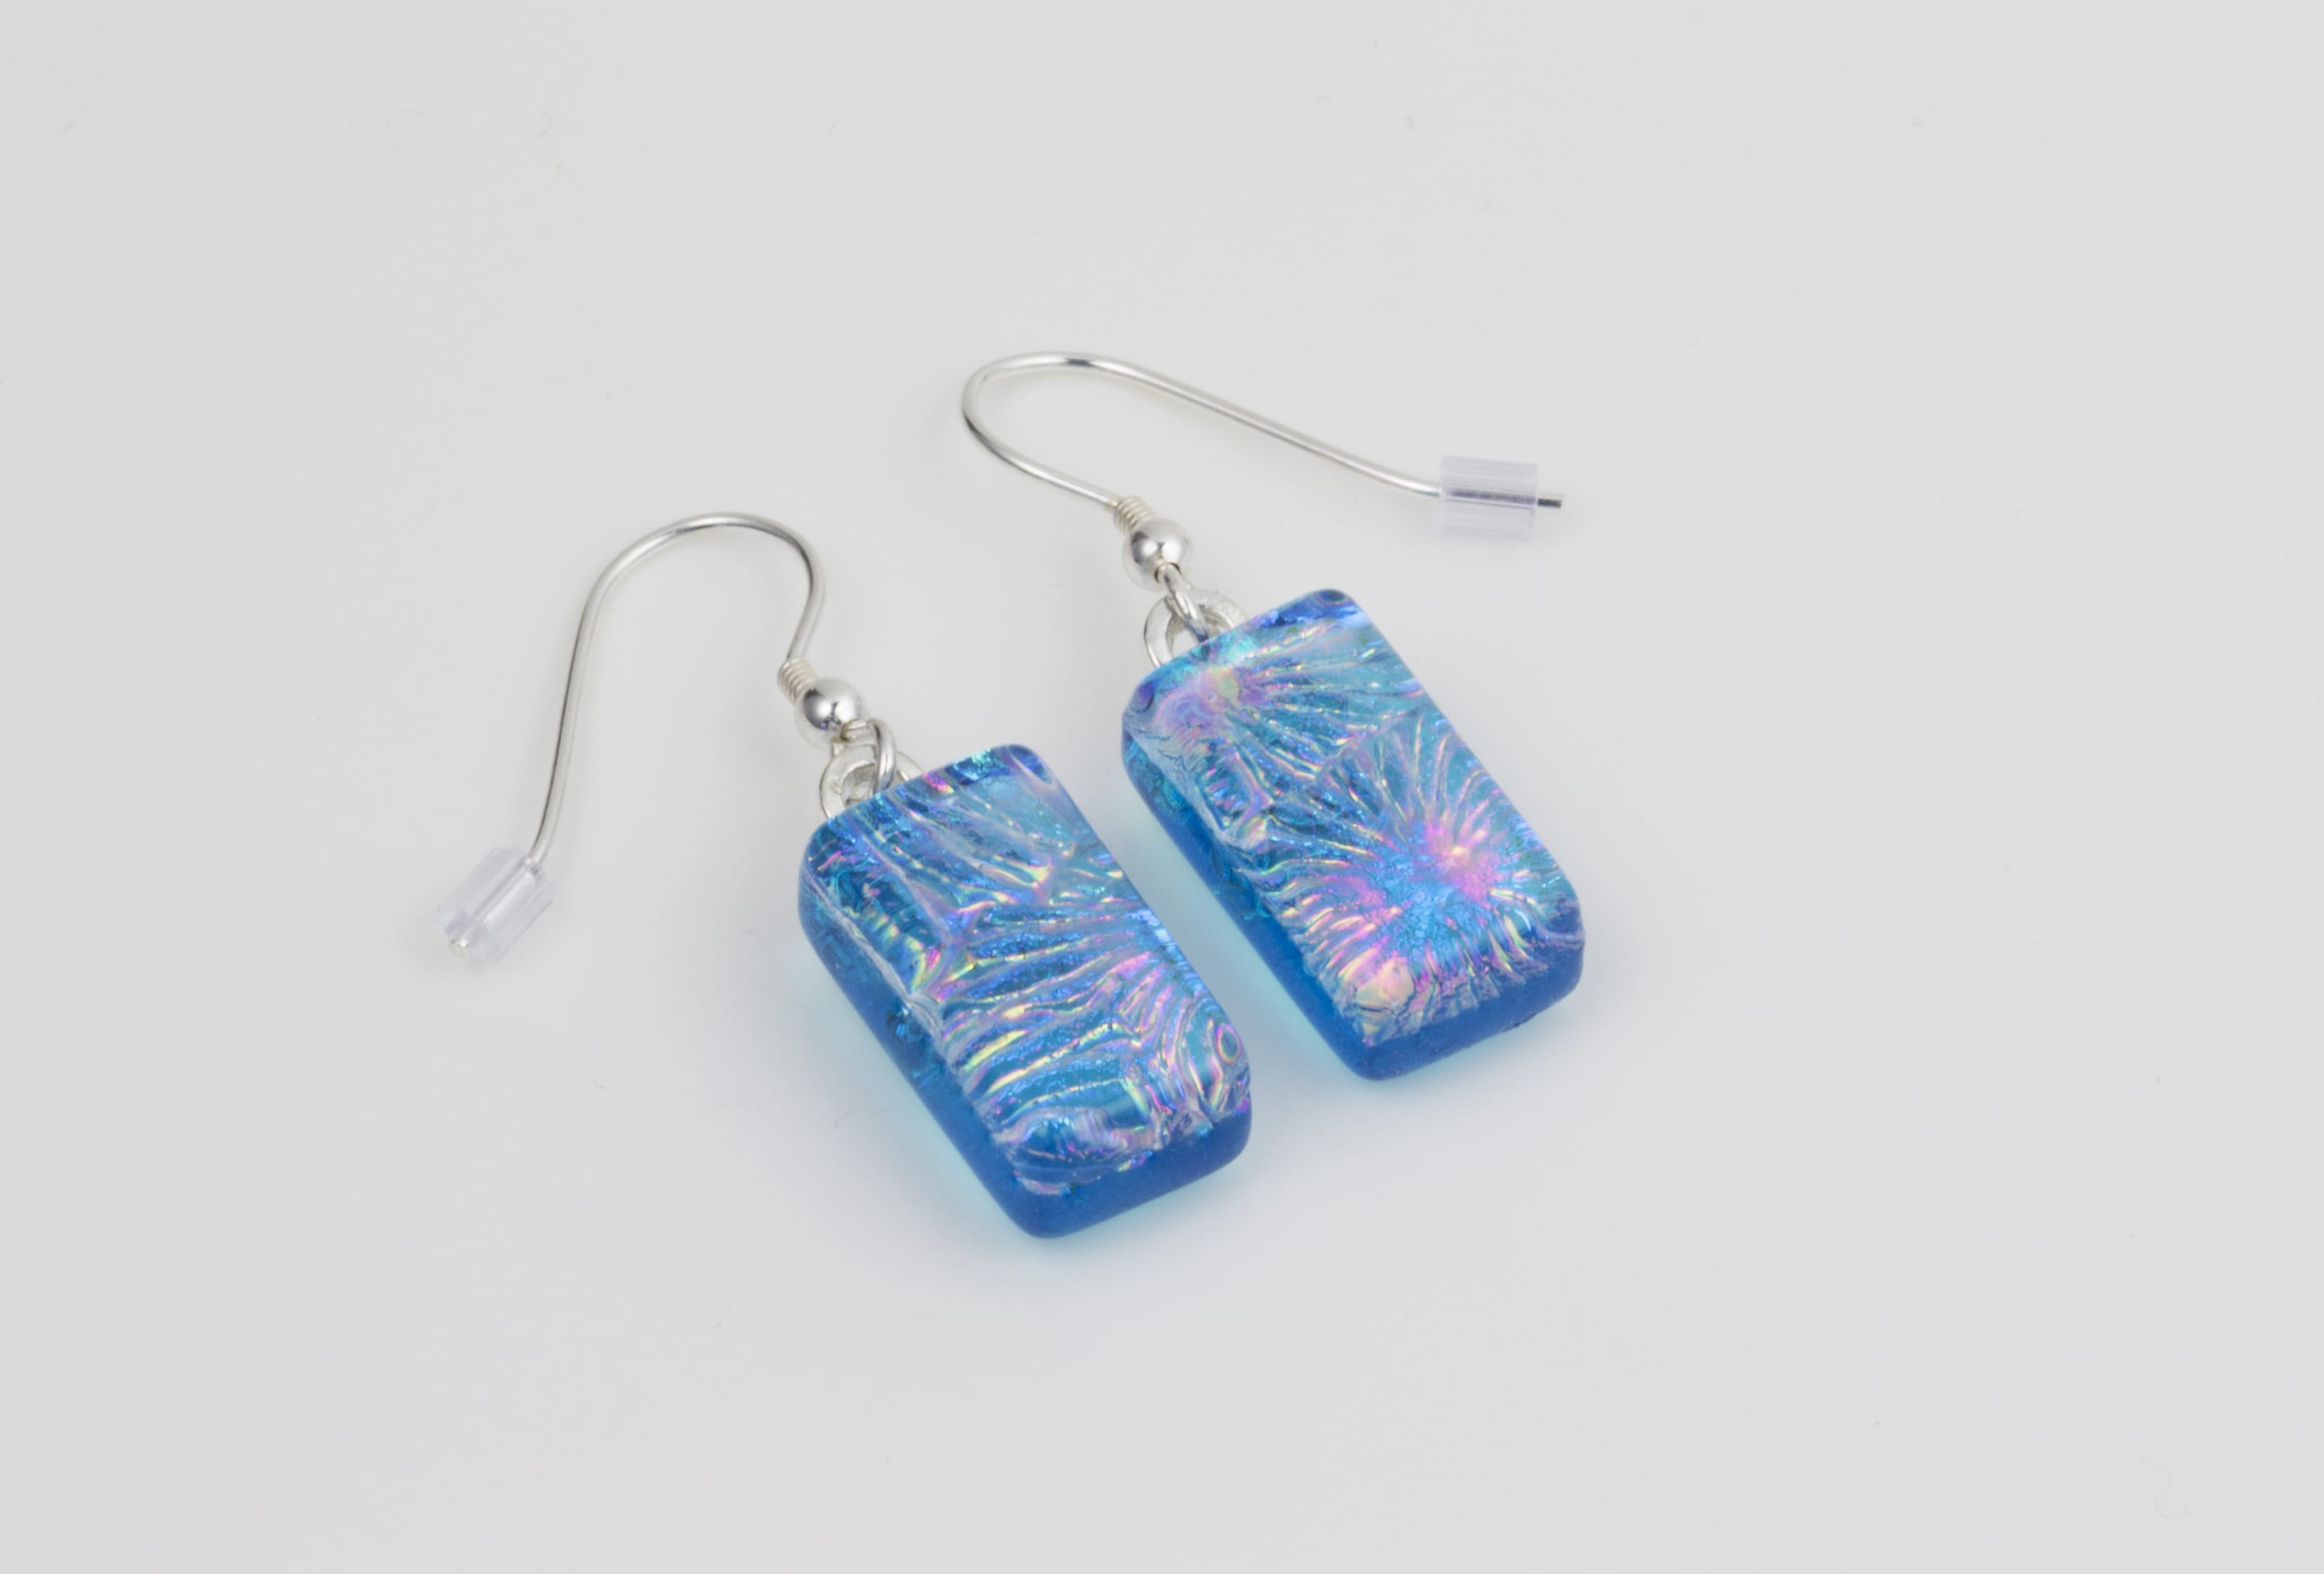 Dichroic glass jewellery, glass drop earrings, turquoise glass earrings with starburst pattern, art glass earrings, handmade in Shropshire, sterling silver hooks